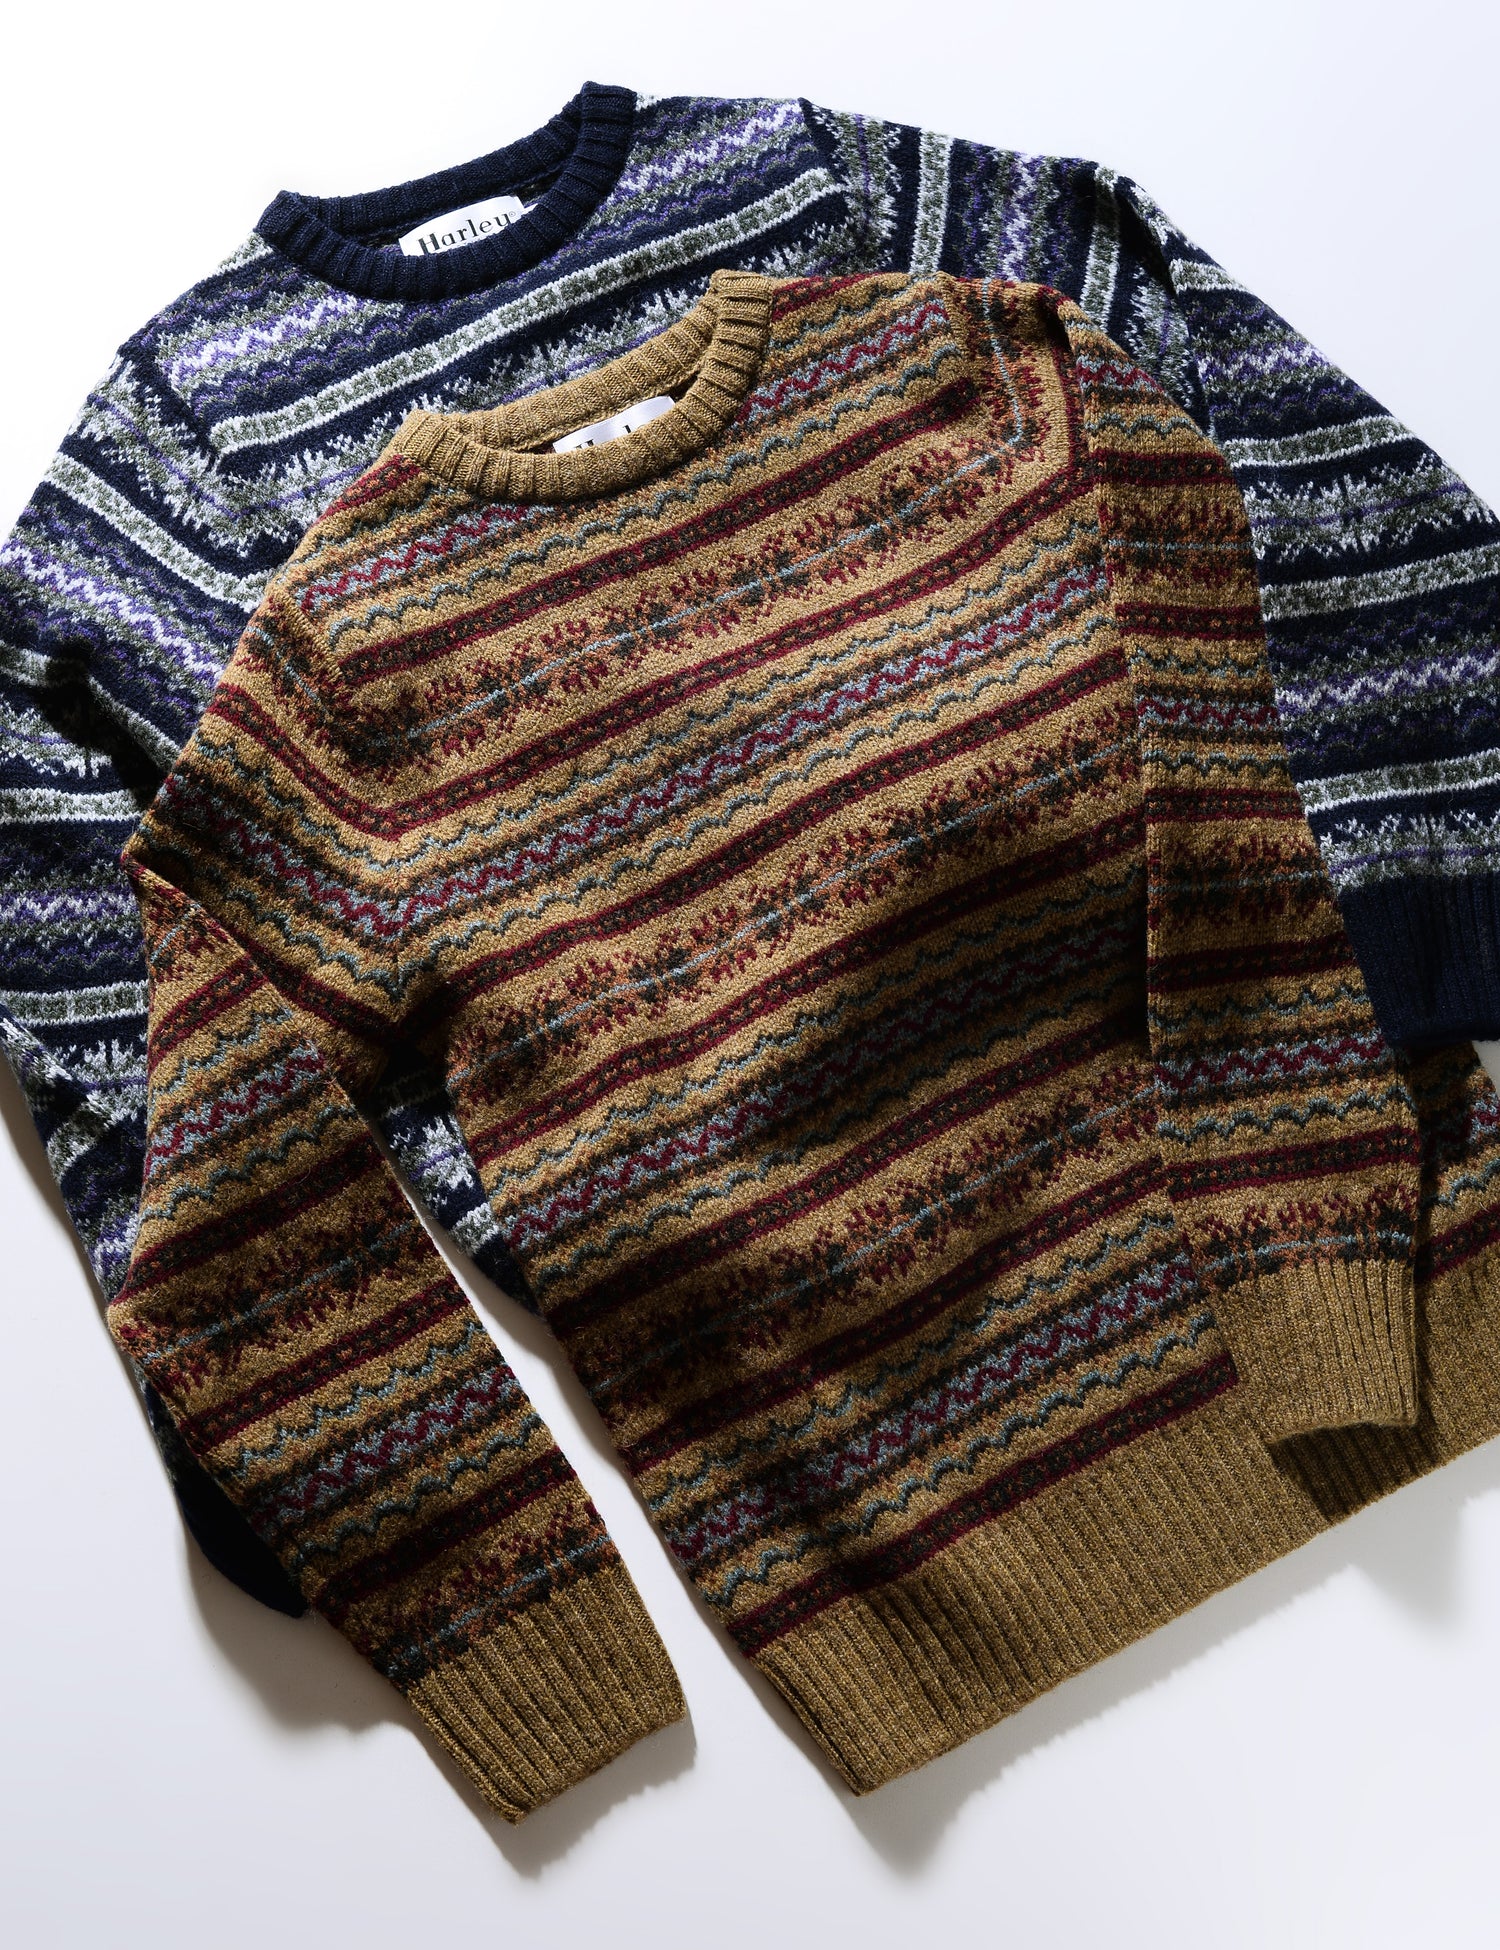 Full length photo of two colors of Harley of Scotland Fair Isle Shetland Sweaters